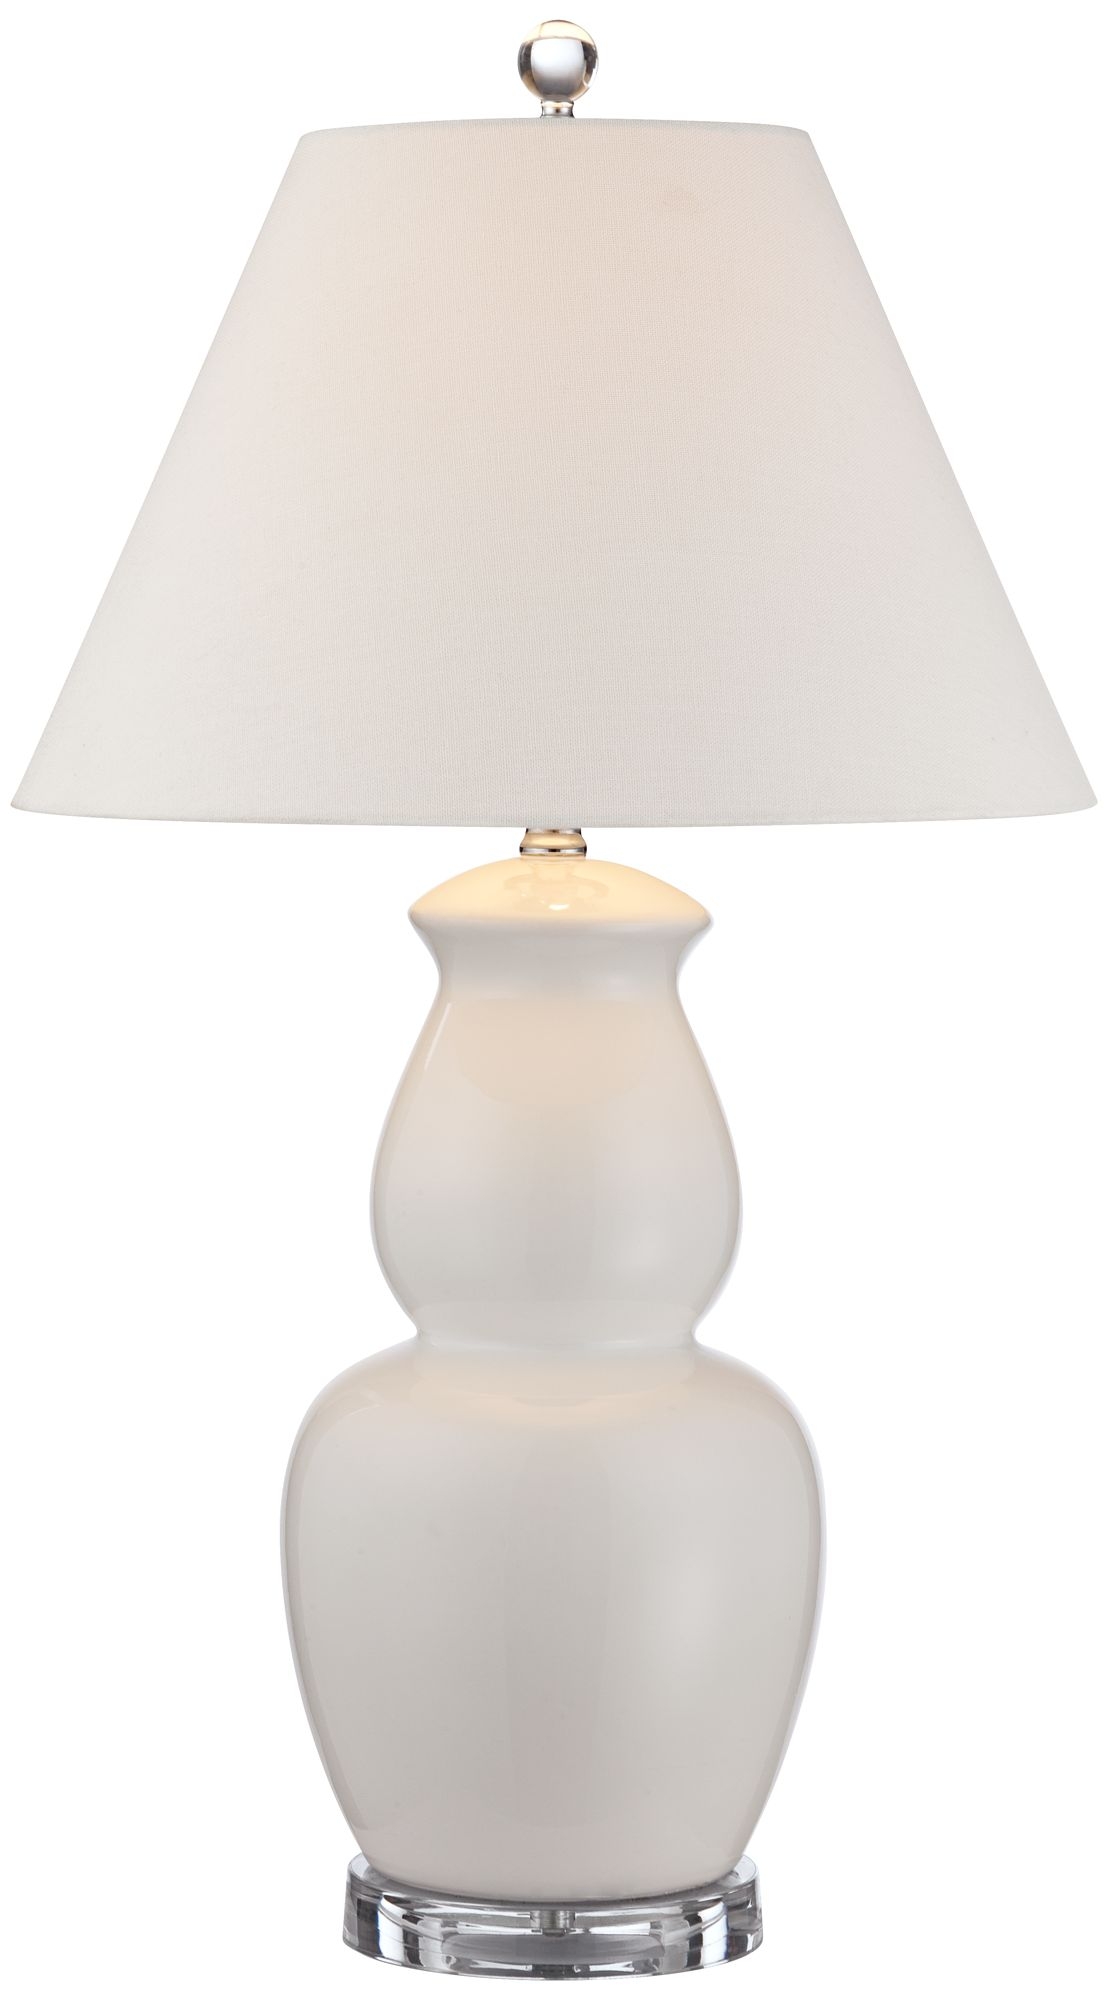 Rhonda White Double Gourd Ceramic Table Lamp - Image 0